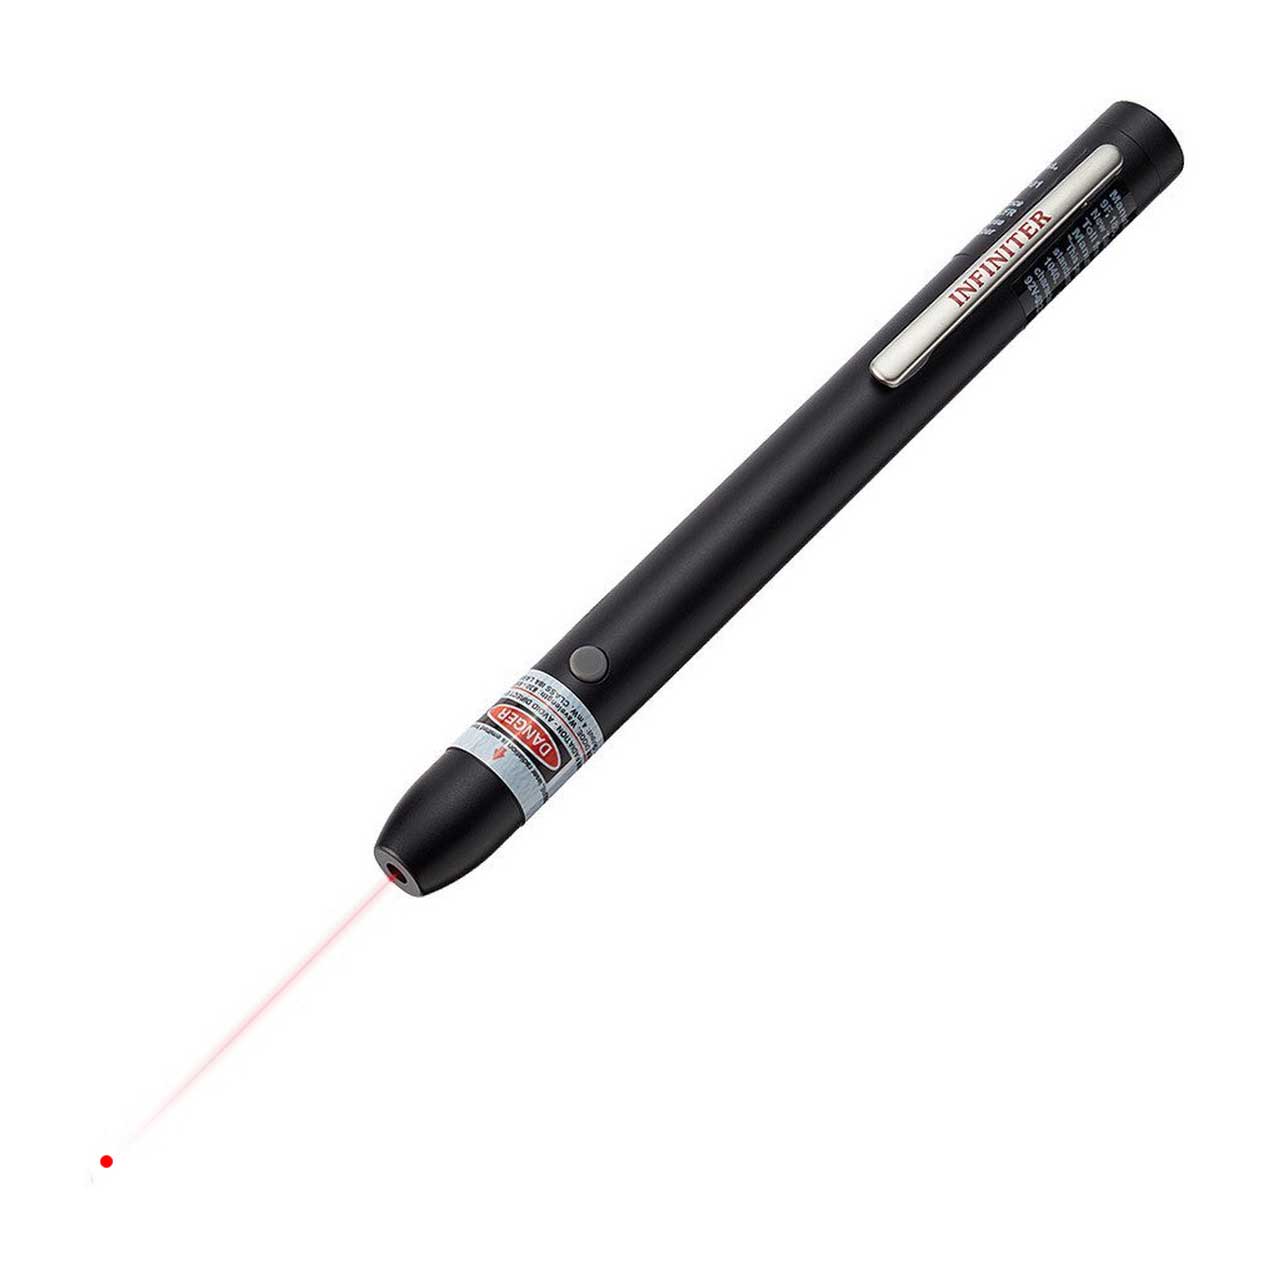 Infiniter 100 650nm Pen Style Laser Pointer with 500yd Range - Black